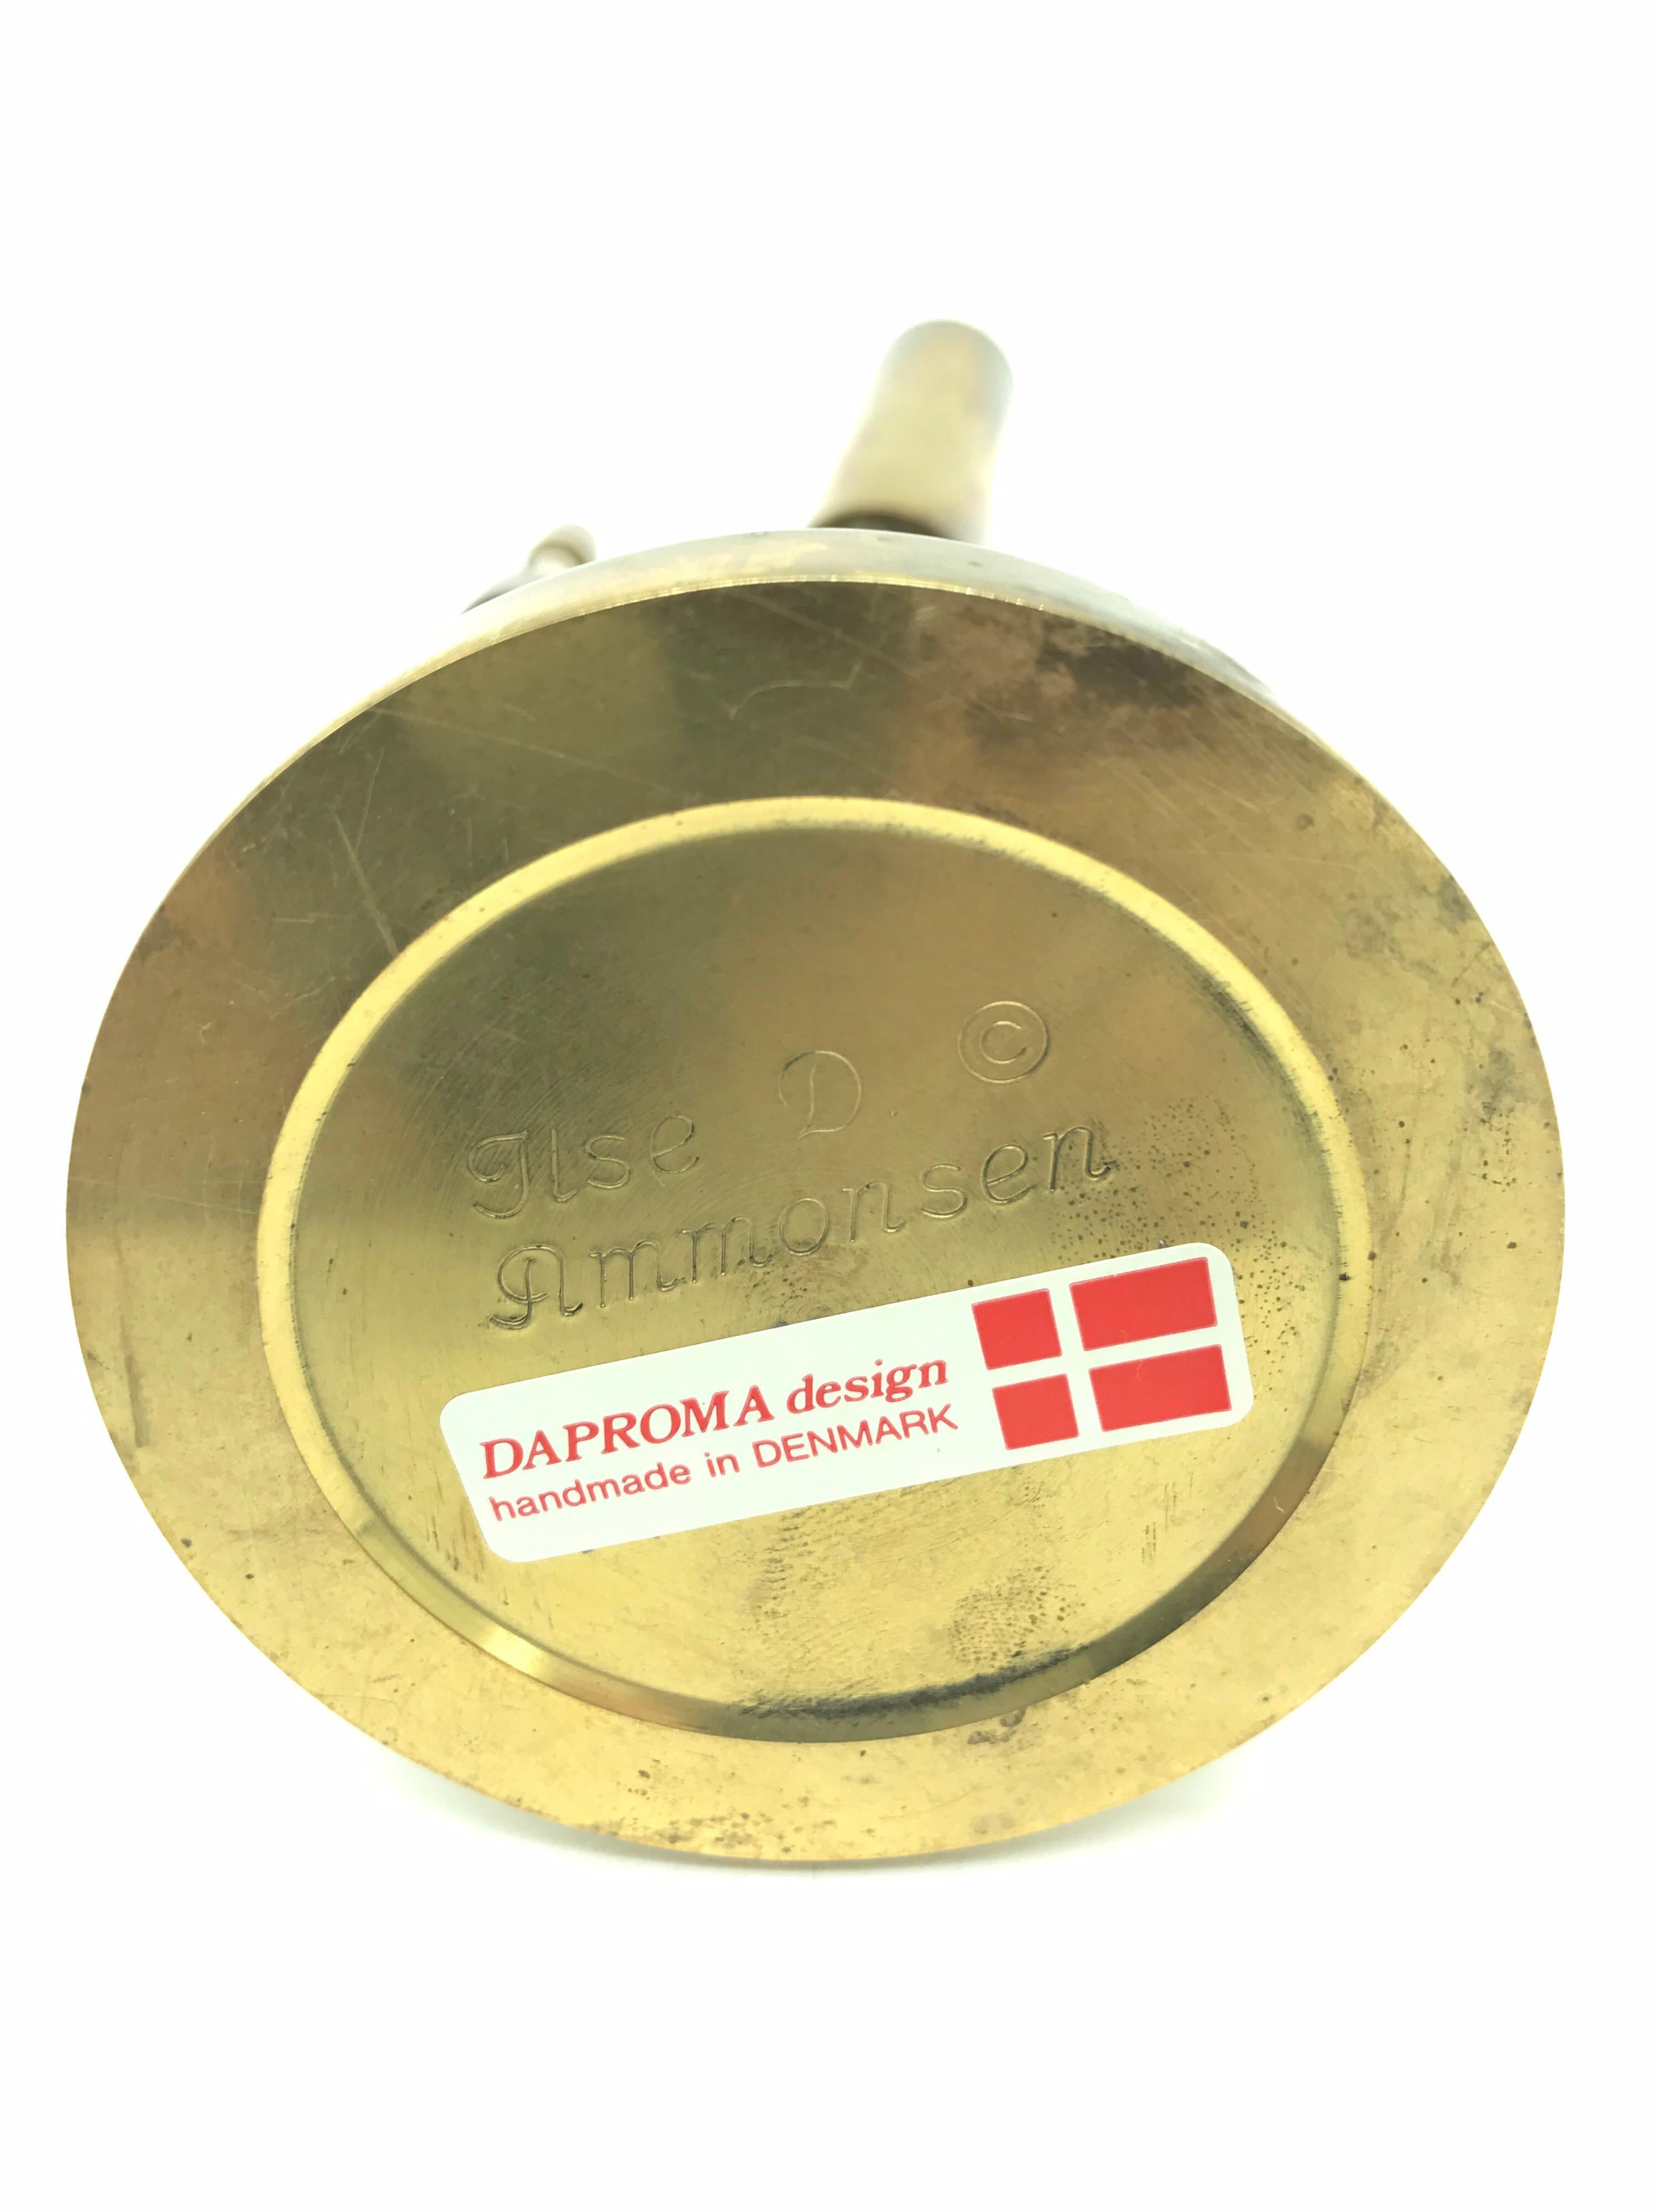 Vintage Unused Danish Midcentury Oil Lamp by Ilse Ammonsen for Daproma Design  2